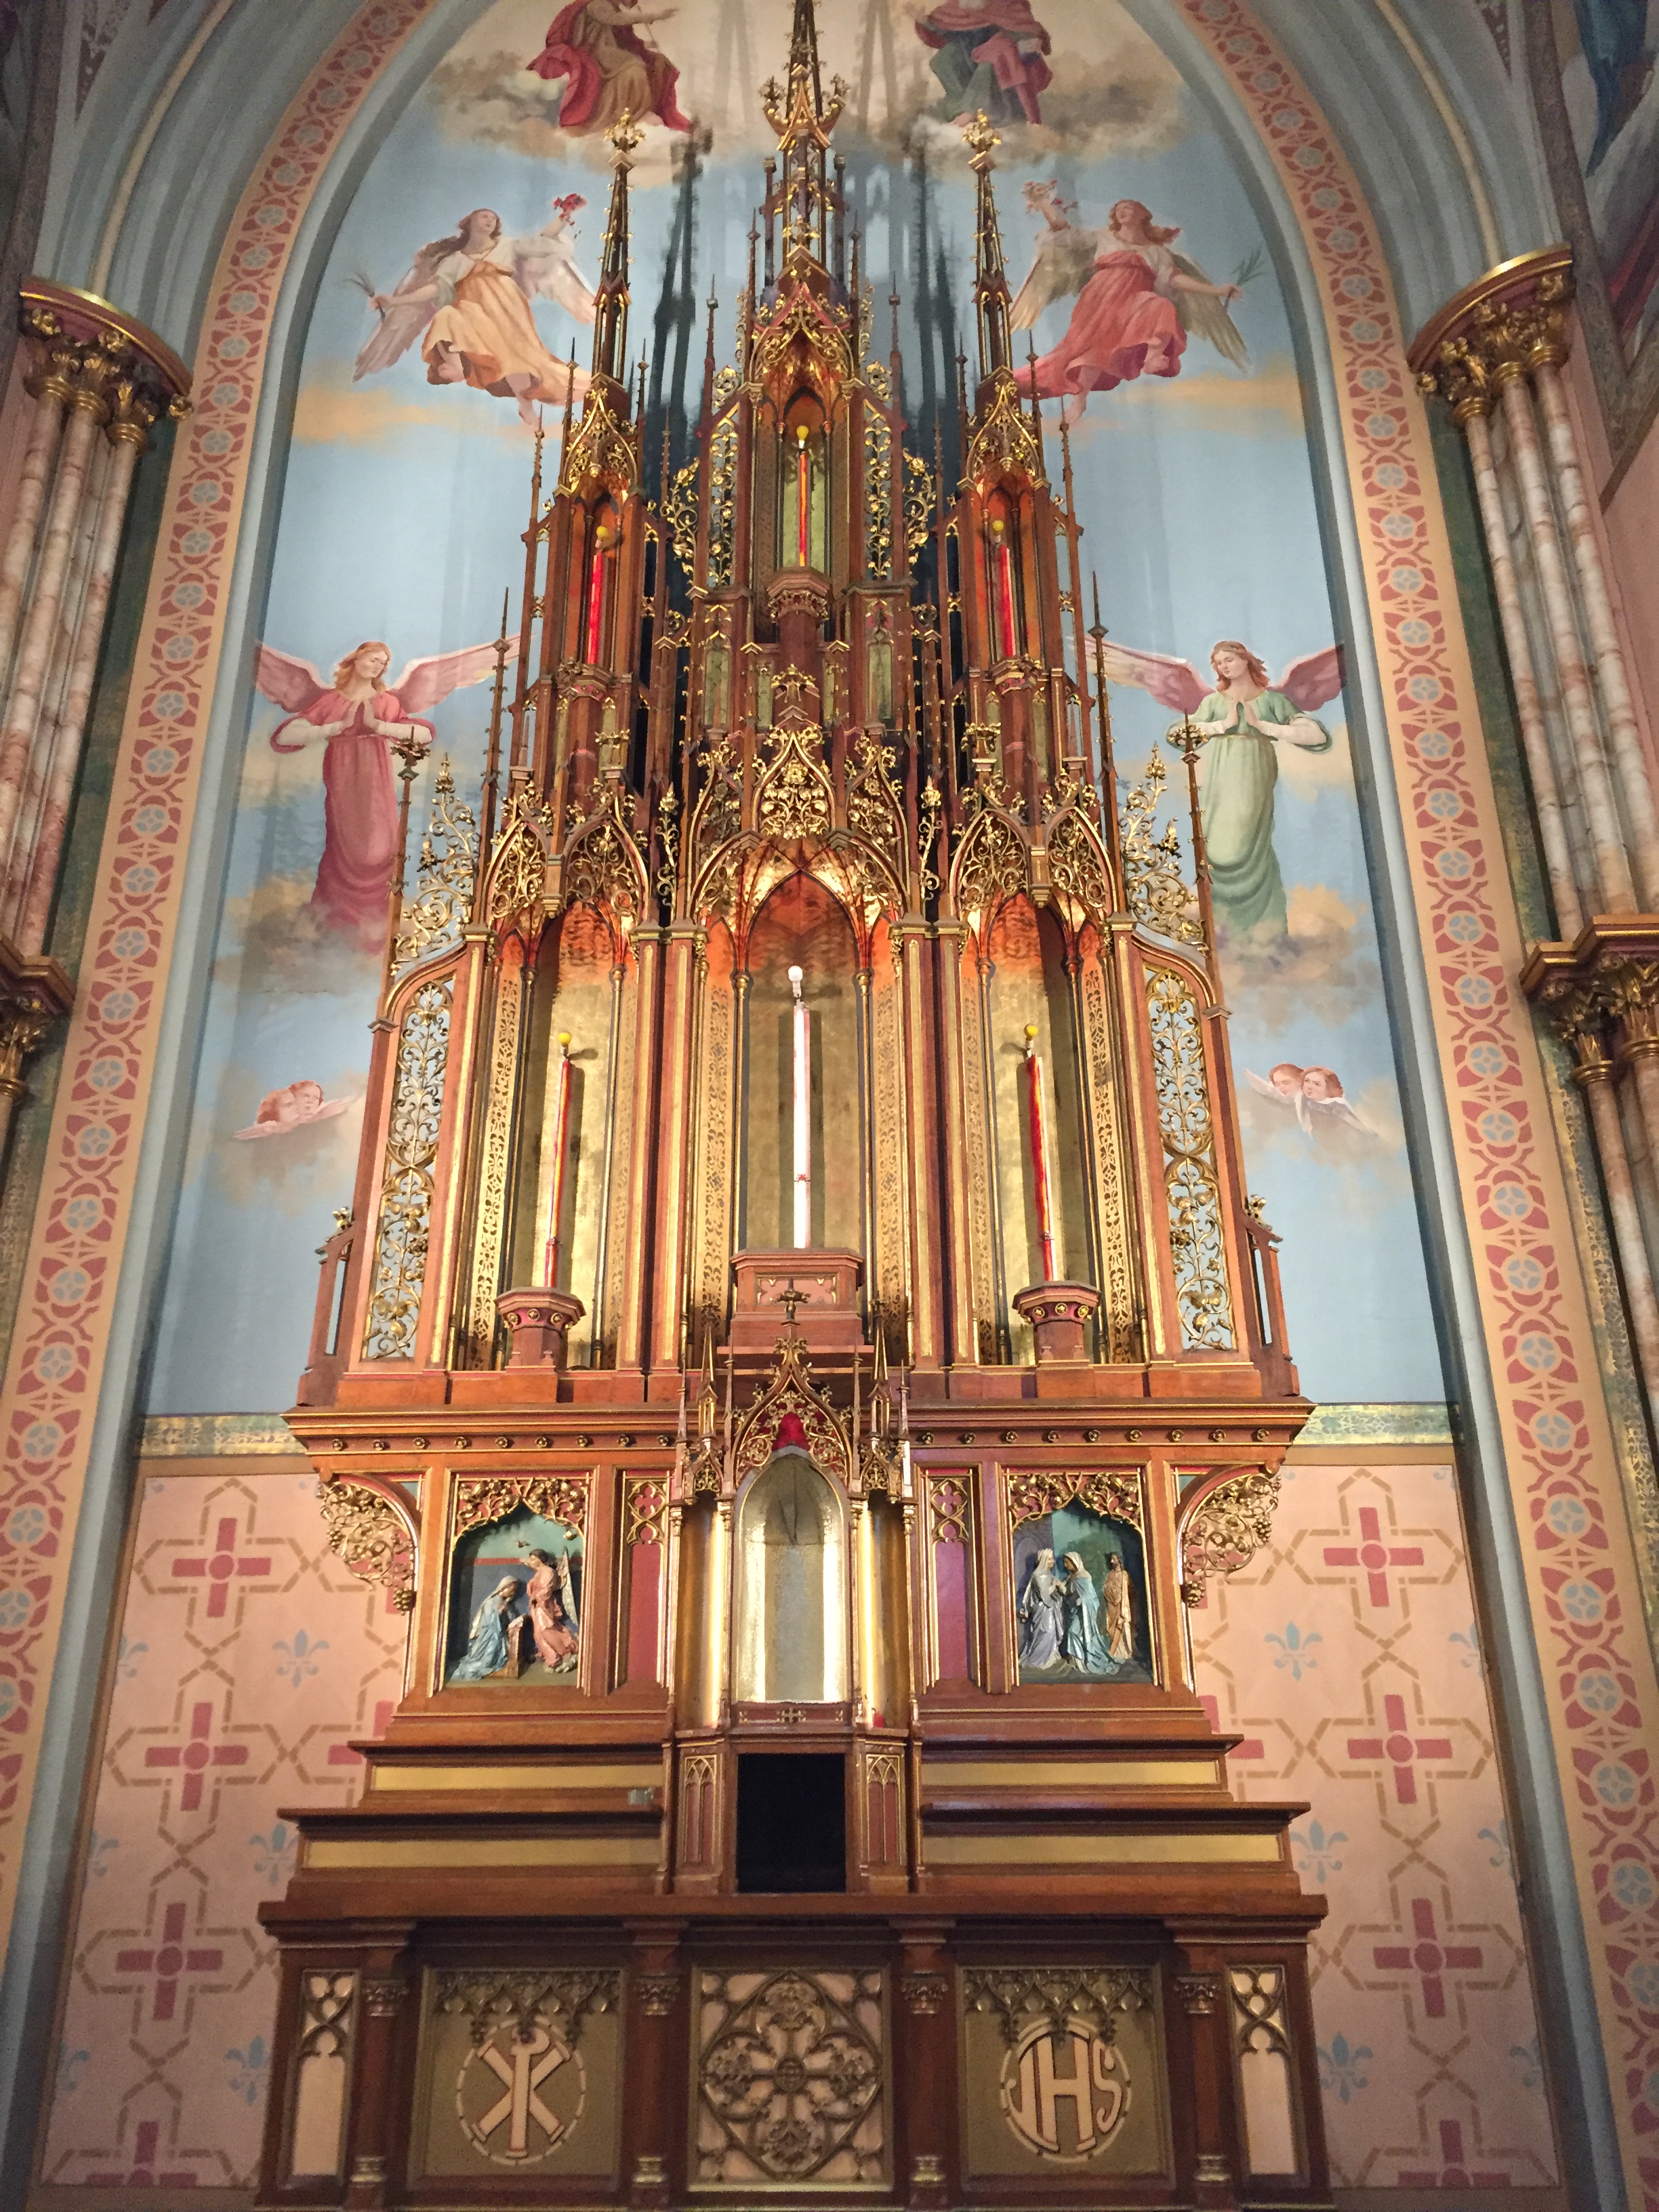 St. Laurentius' interior, January 2017, courtesy of Philadelphia Historical Commission